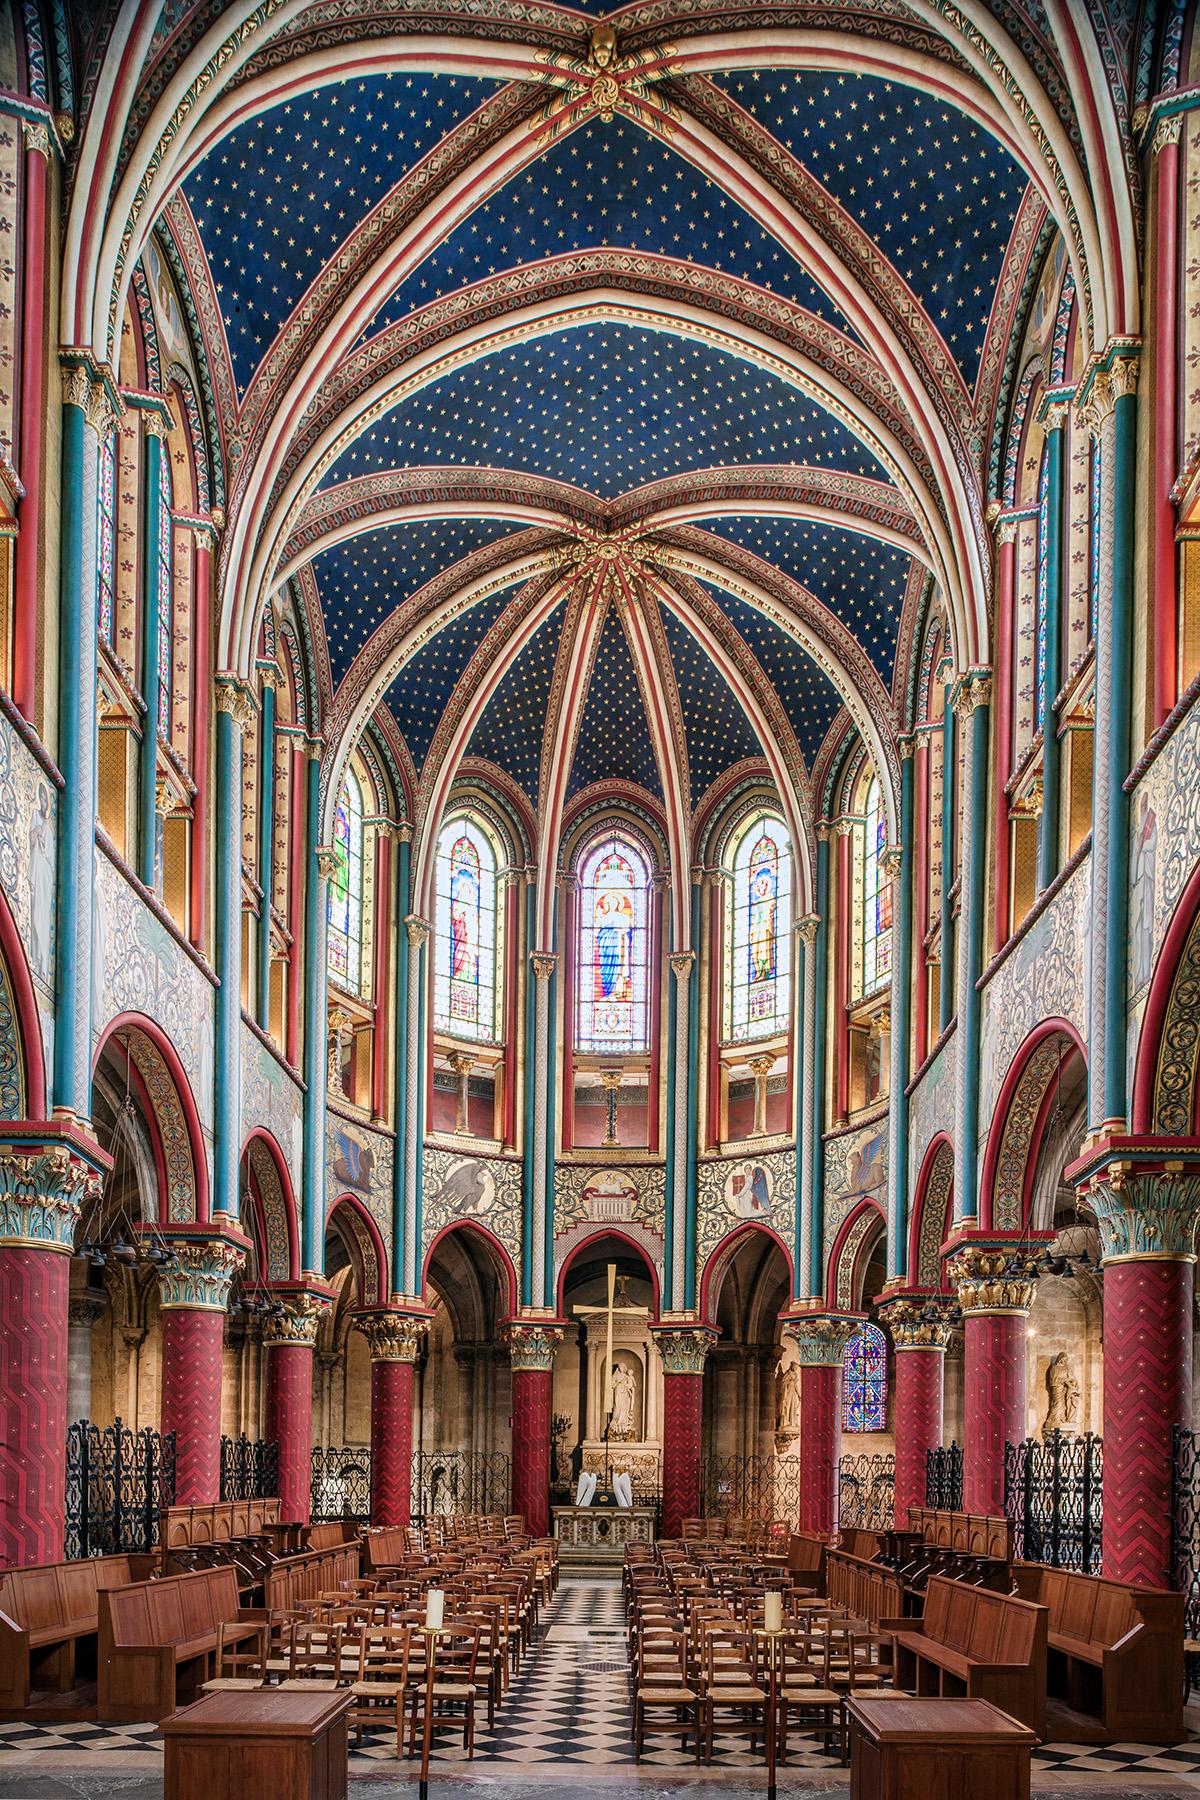 The 10 Best Churches in Paris Worth a Visit